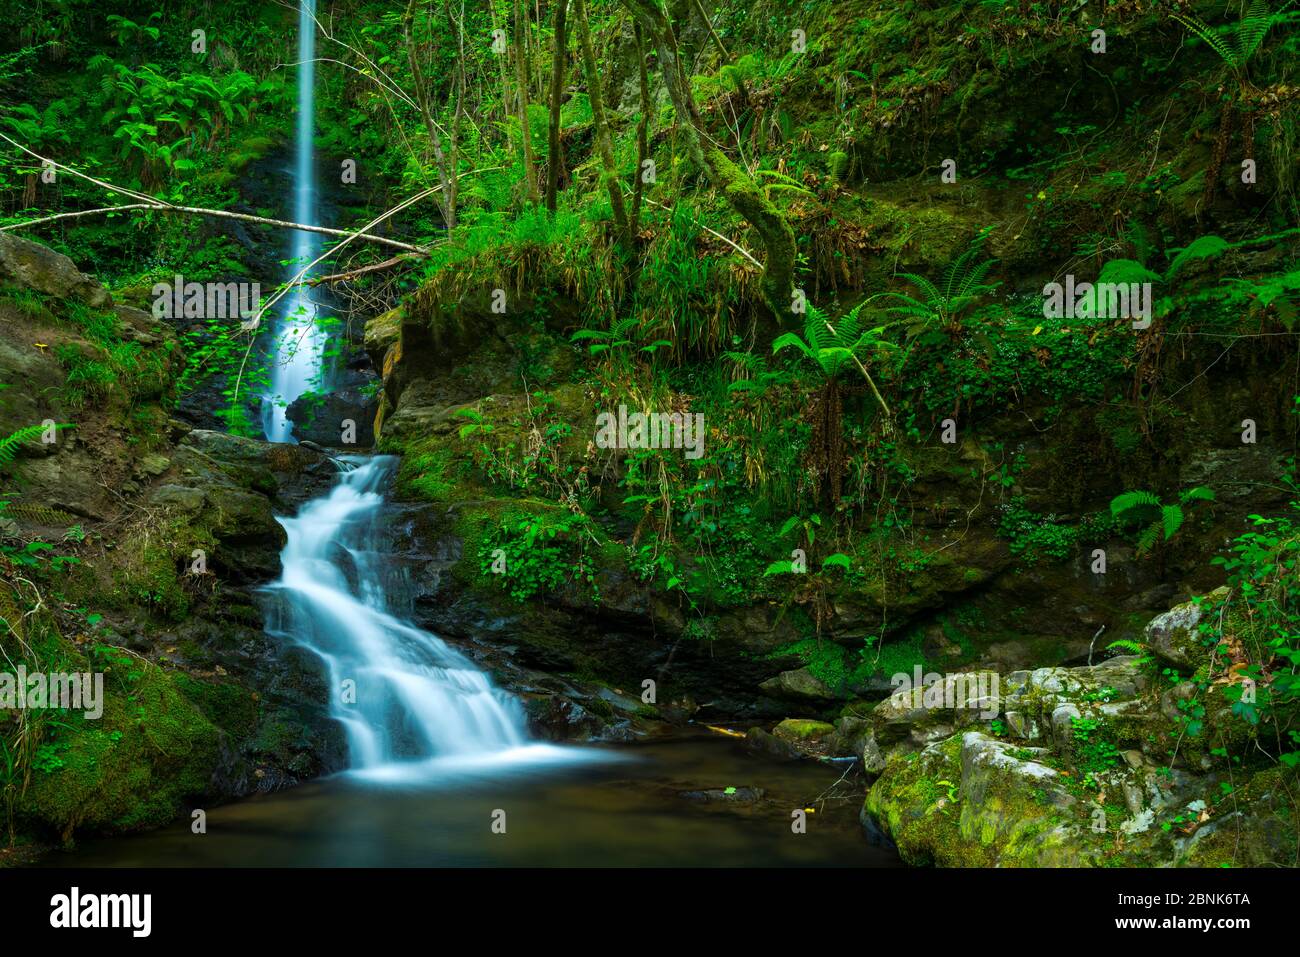 Cascadas de la cascada de la lamina, lamina, Parque Natural Saja Besaya,  Cantabria, España, Europa. Mayo de 2015 Fotografía de stock - Alamy